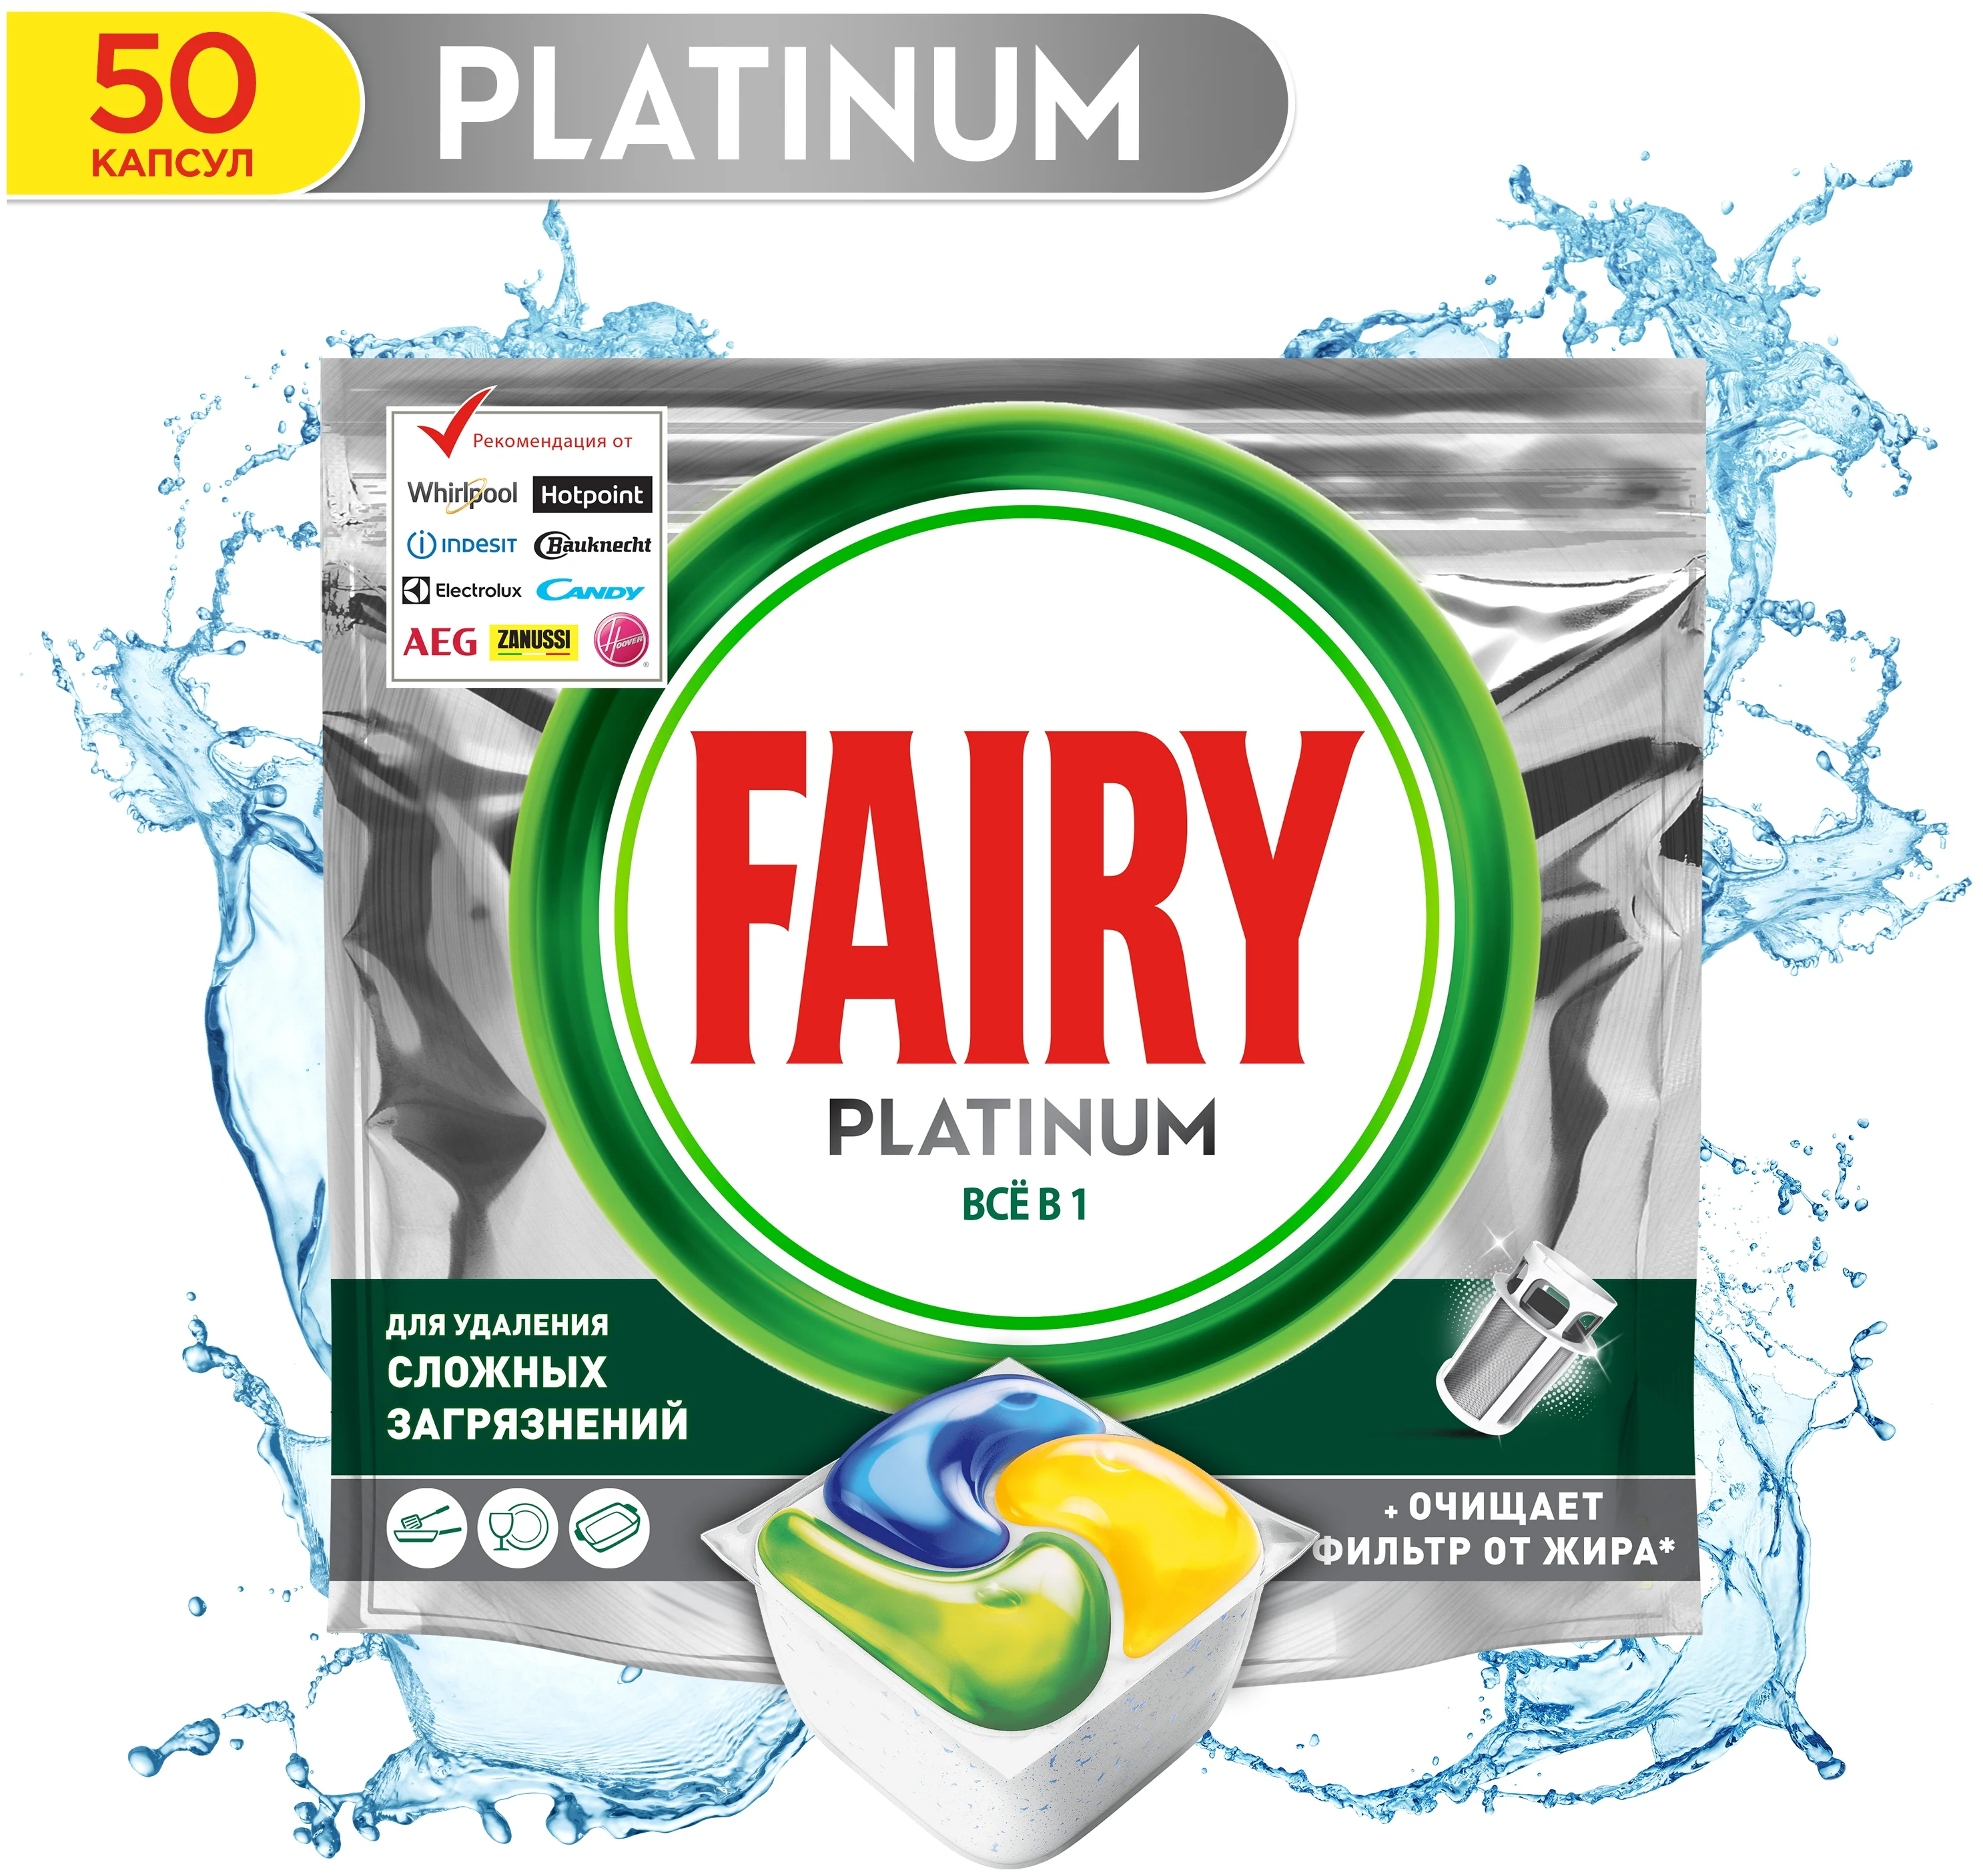 Fairy Platinum All in 1, лимон - особенности: растворимая оболочка